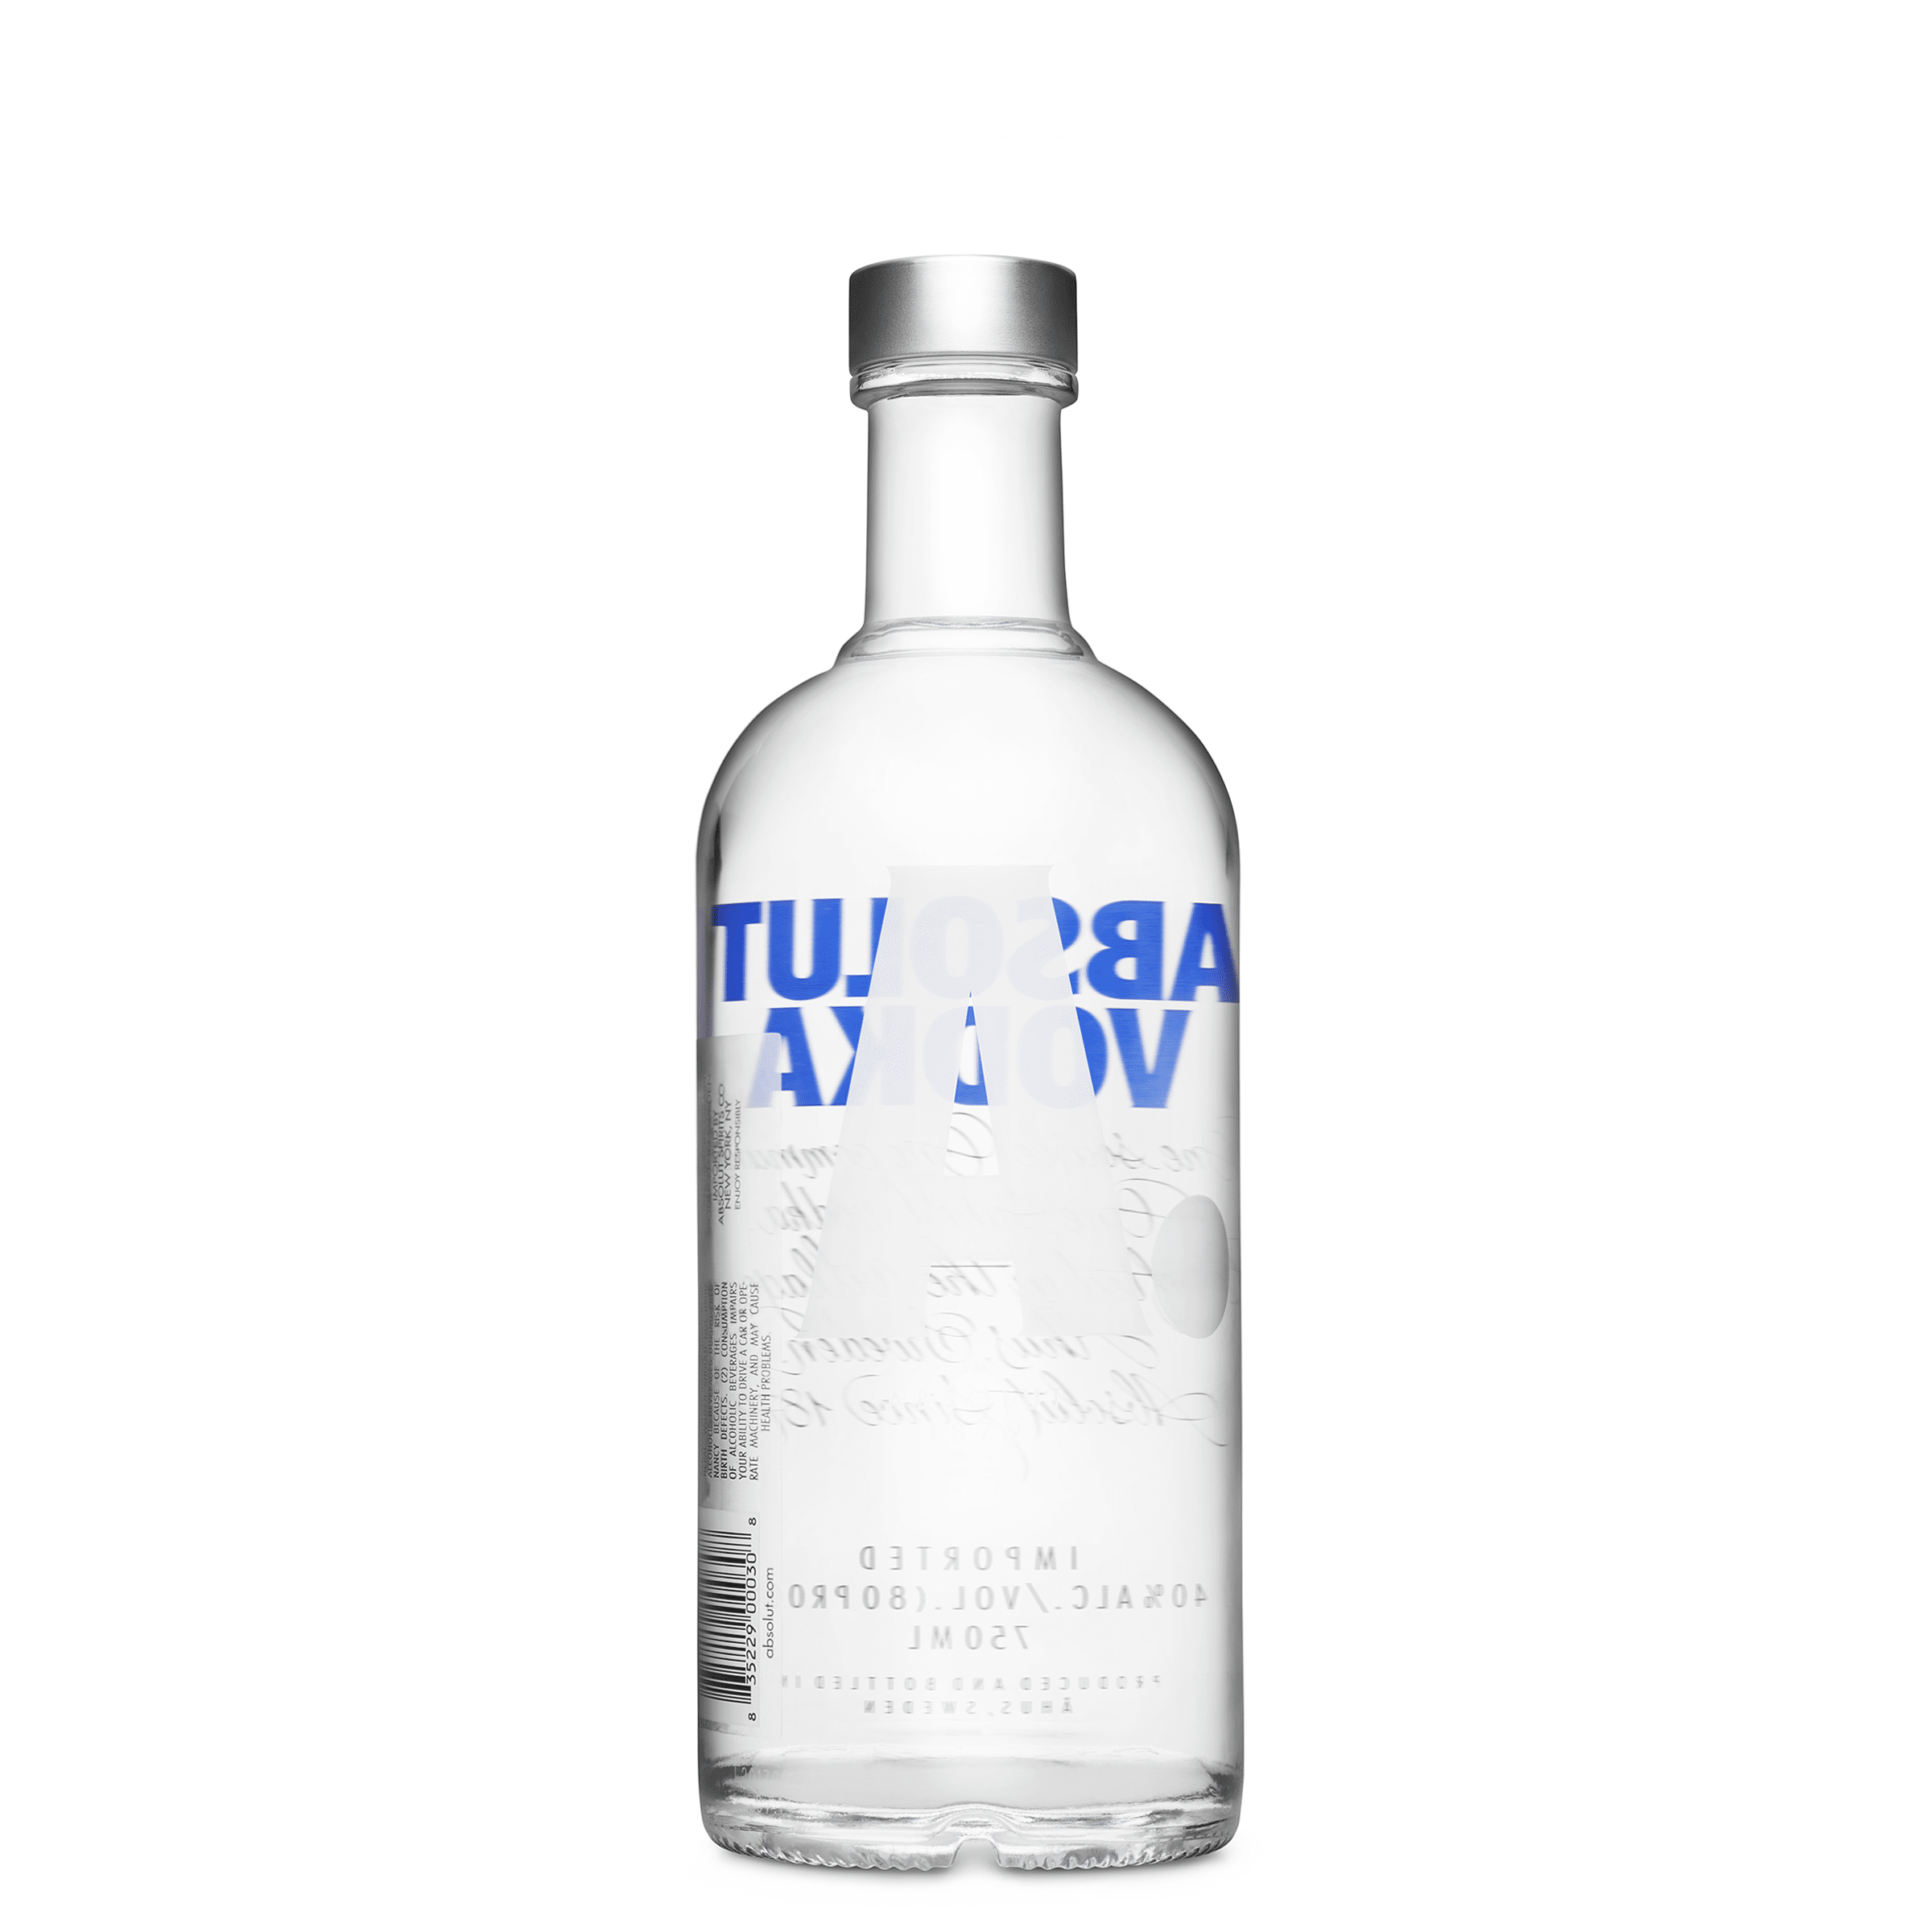 Absolut Vodka Original - Barbank